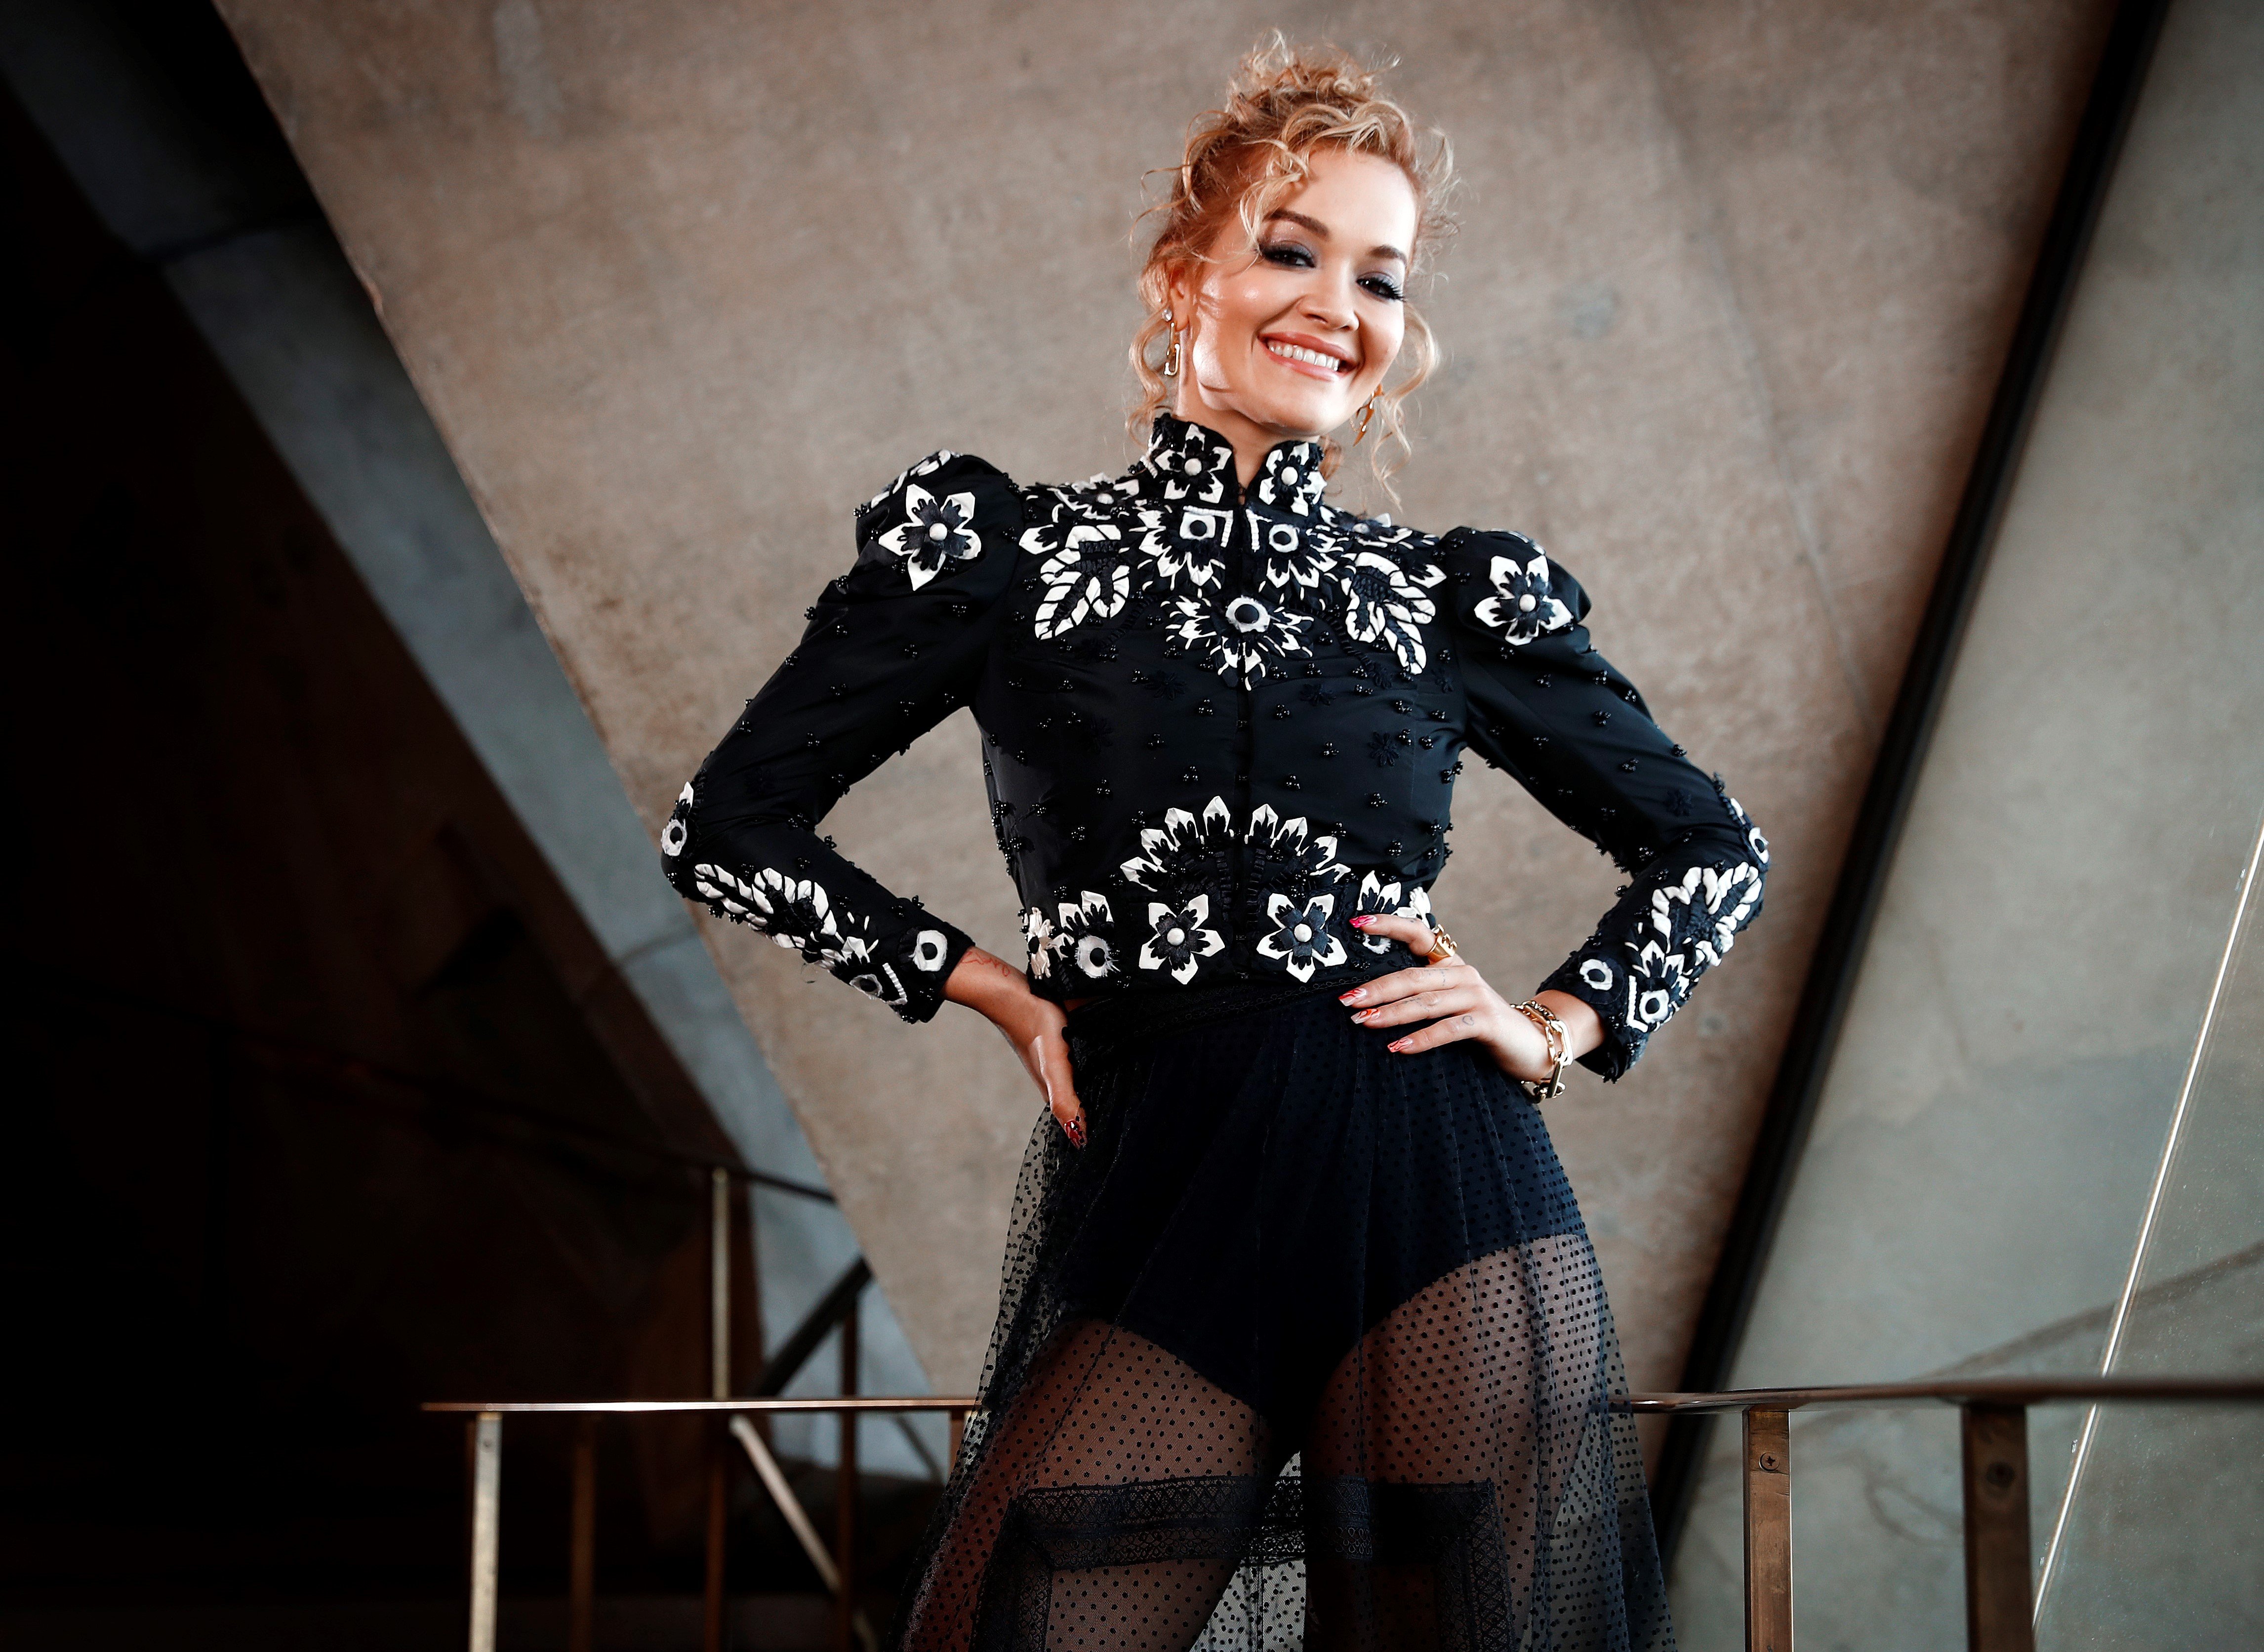 Singer Rita Ora poses in black ensemble during a photo shoot at the Sydney Opera House